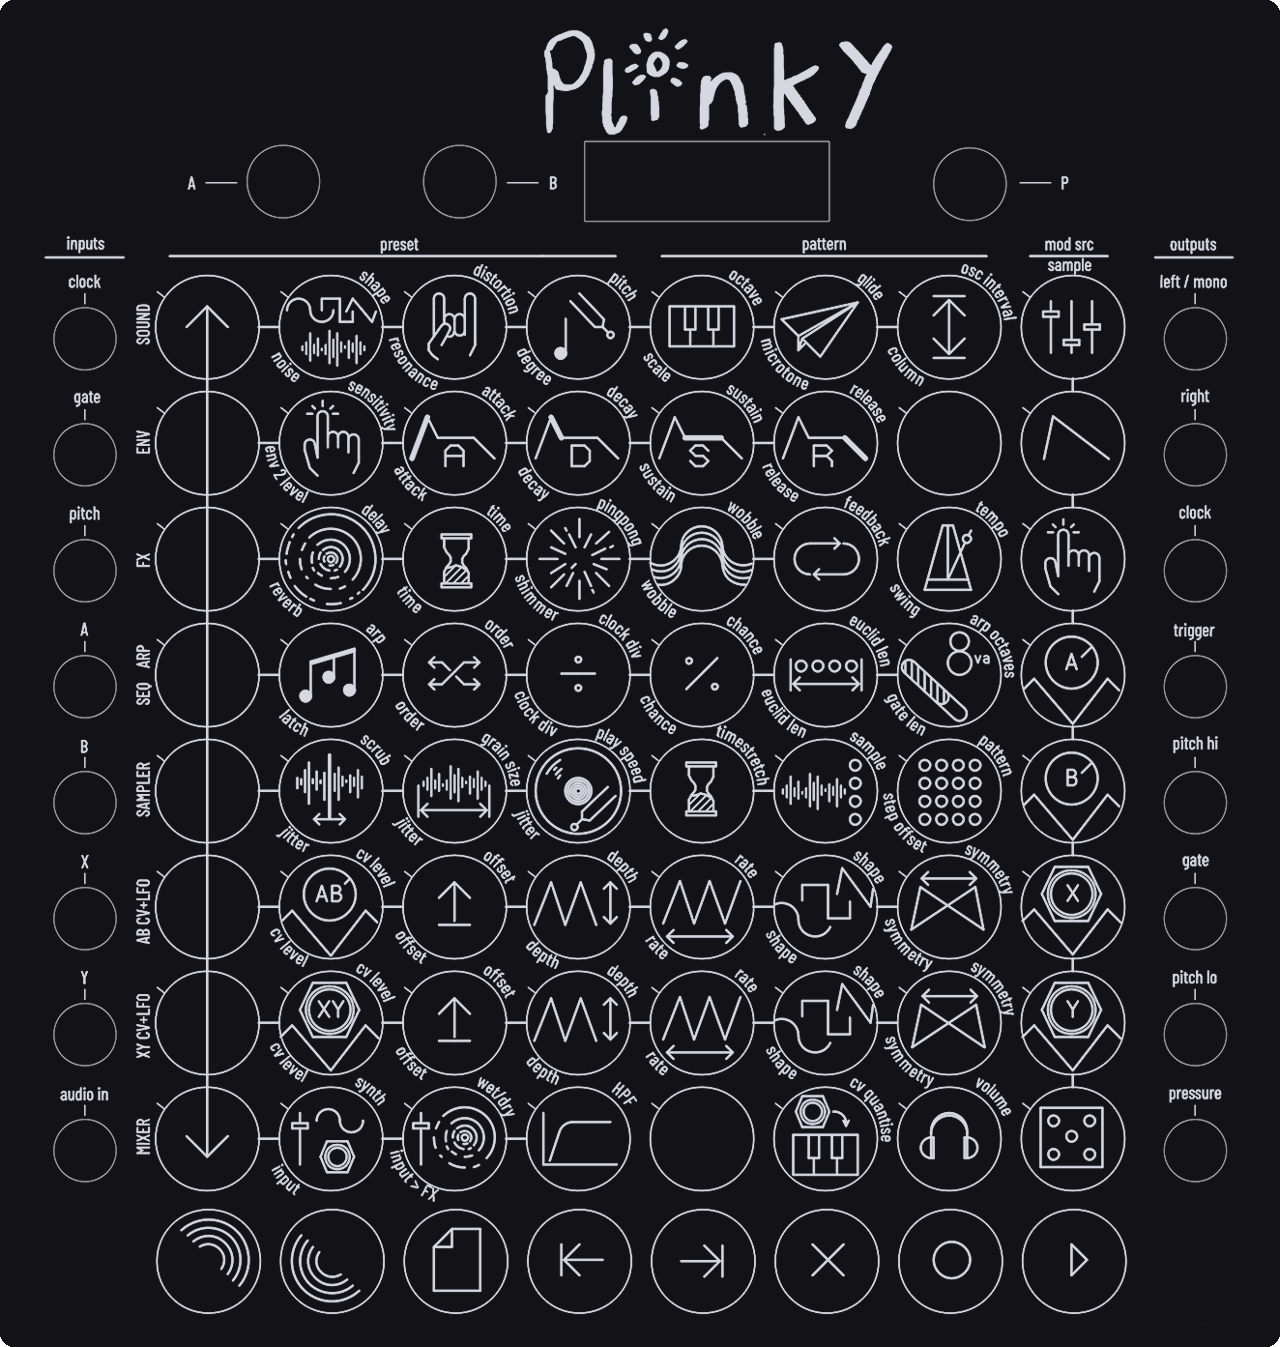 Plinky design